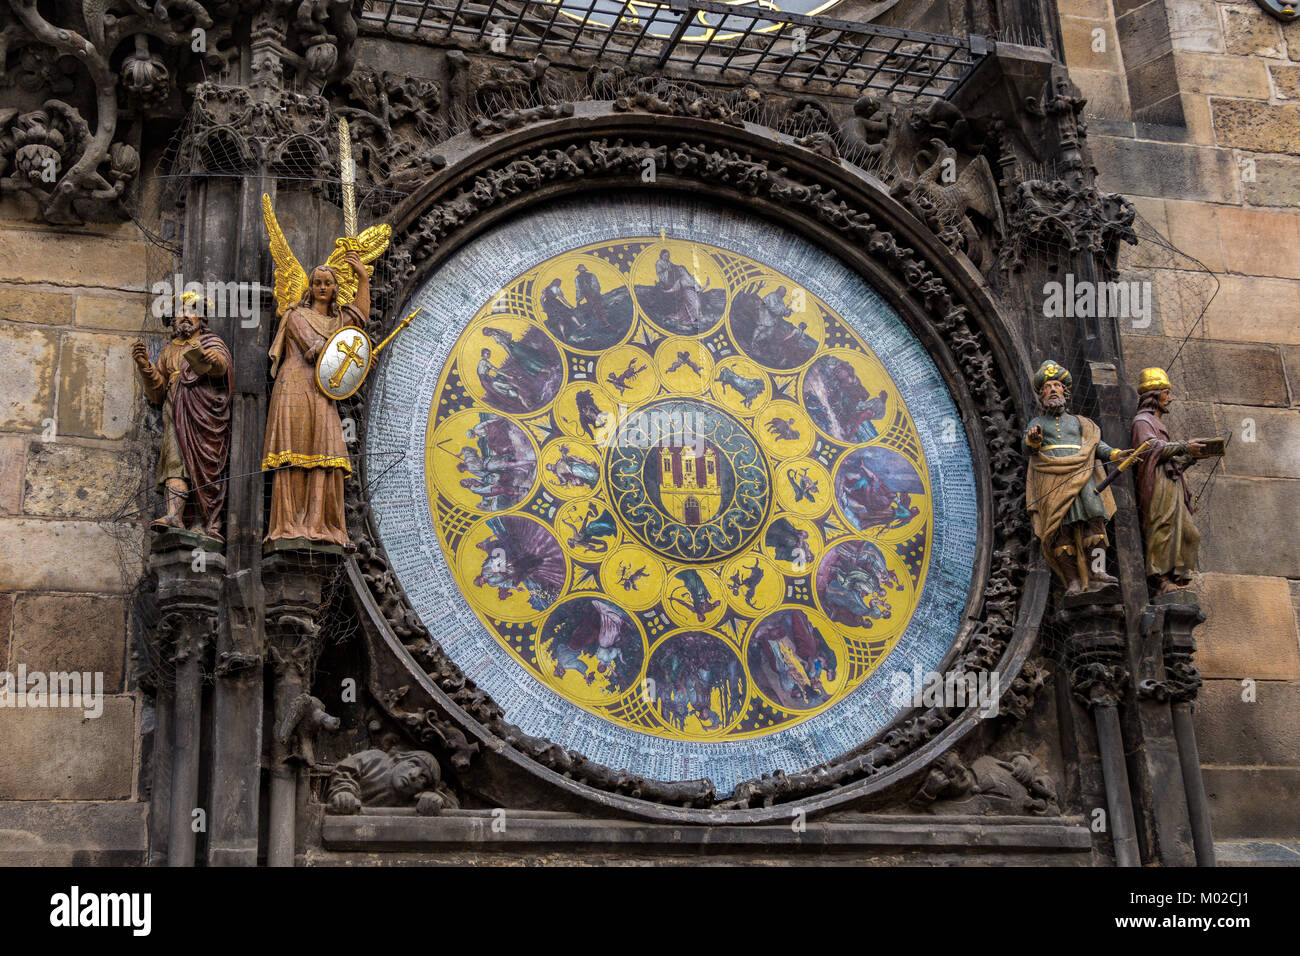 Cerca de la placa de la calandria de Praga con el Reloj Astronómico de Praga reloj figuras animadas Foto de stock